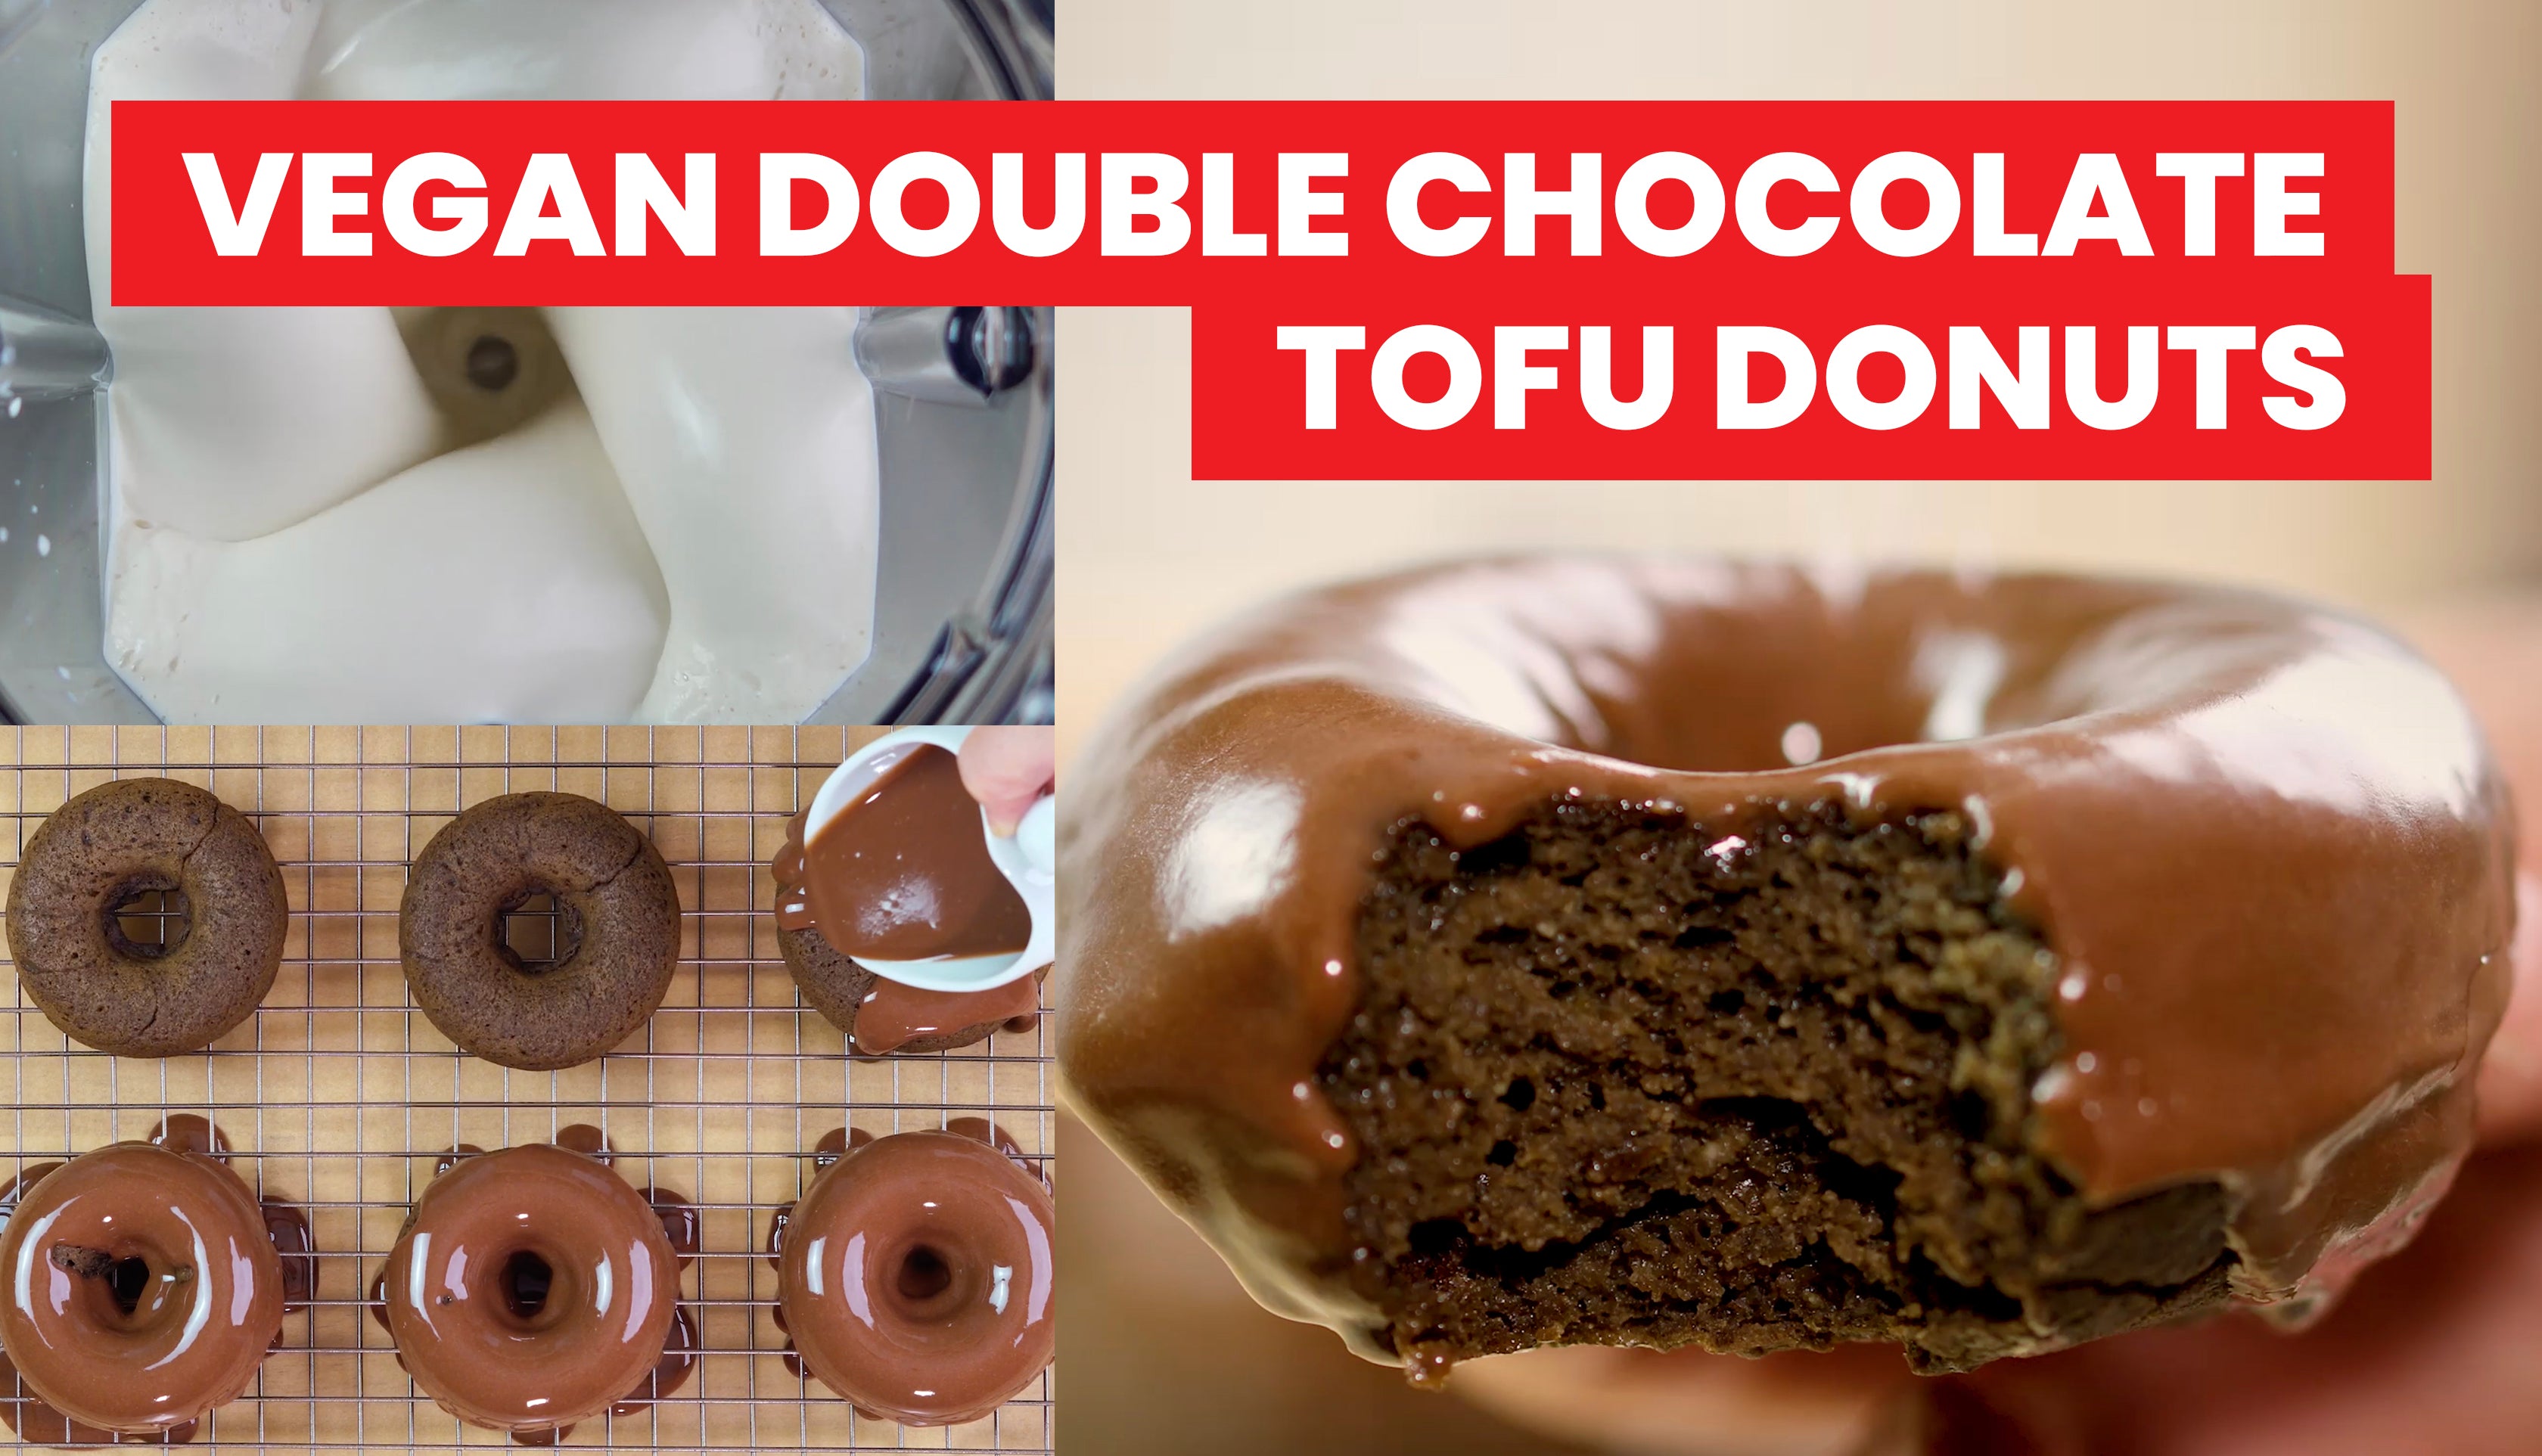 Vegan double chocolate tofu donuts